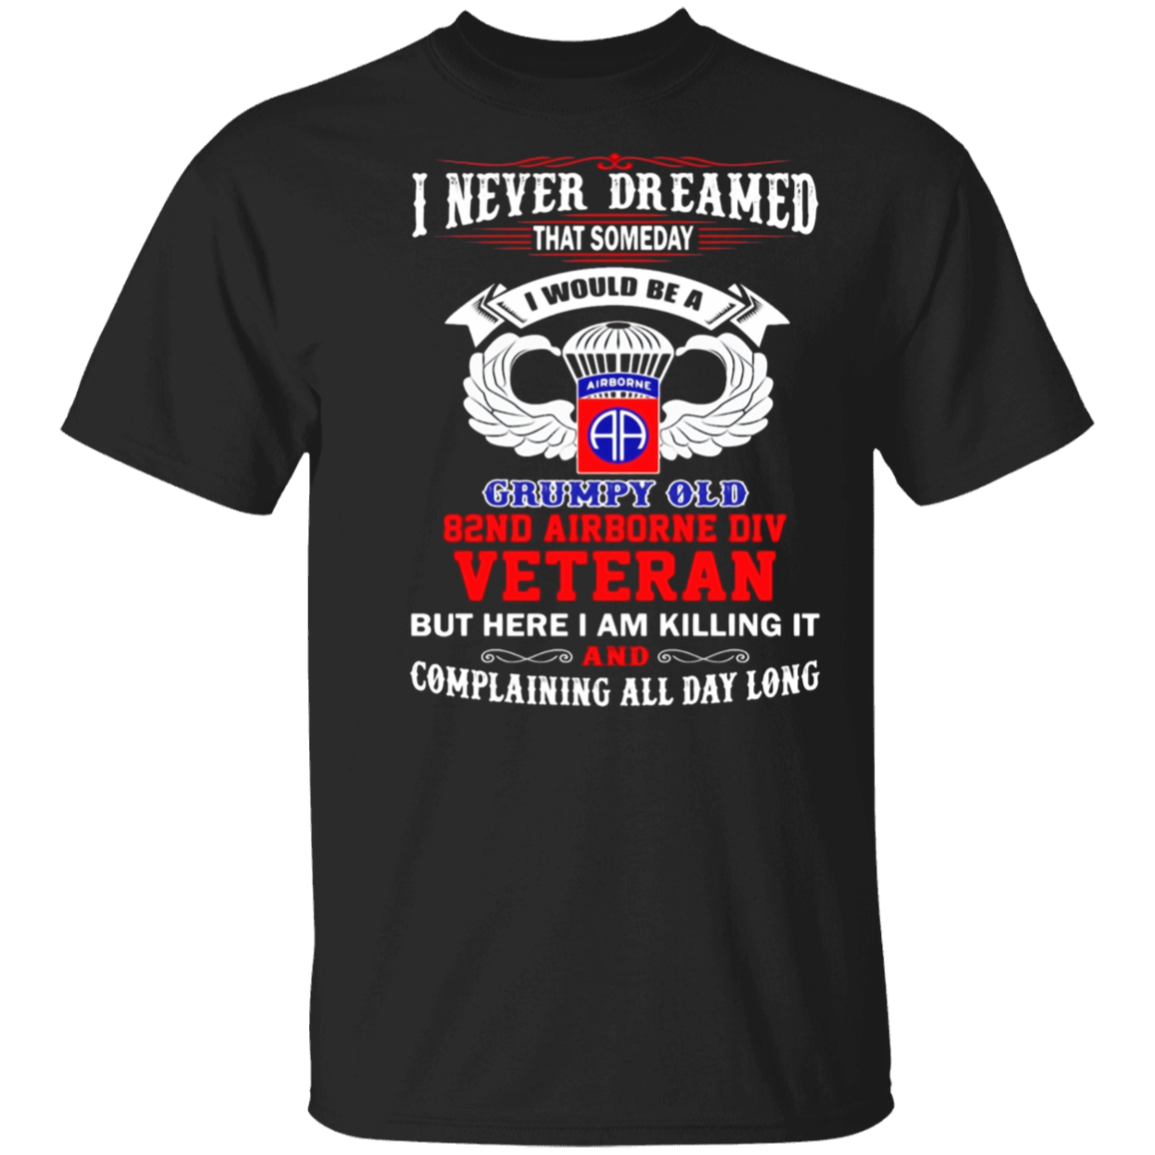 Grumpy Old 82nd Airborne Division Veteran shirt - FrankyTee